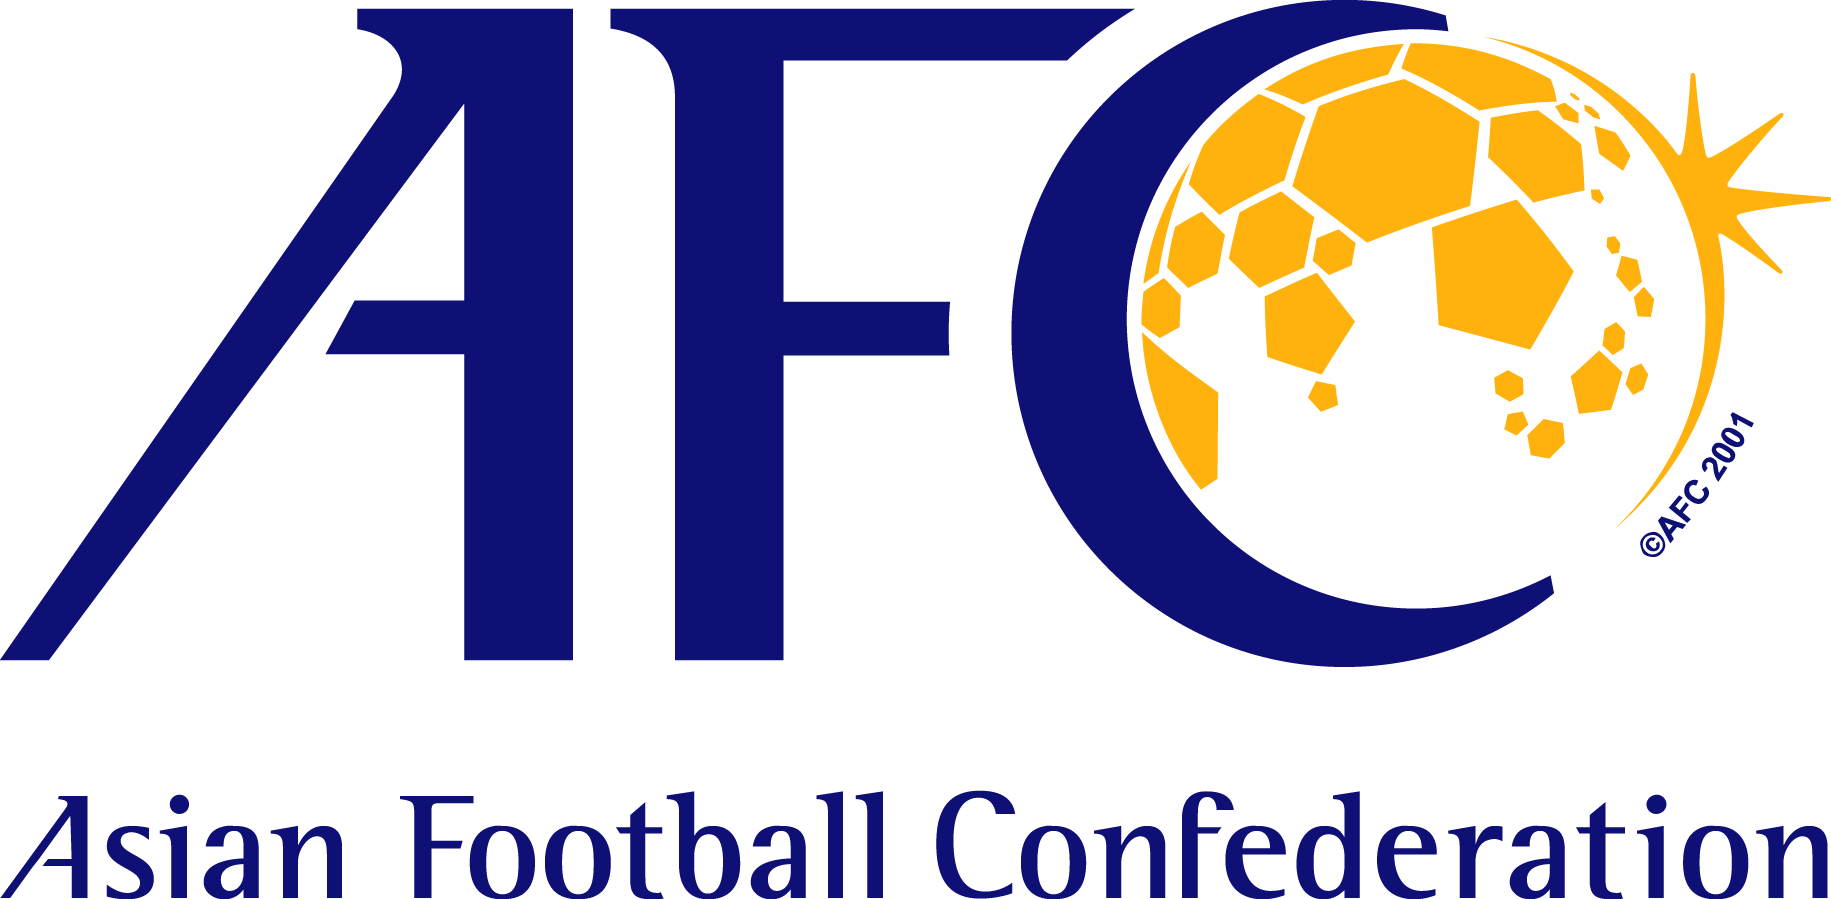 FIFA World Cup Qualifying - AFC